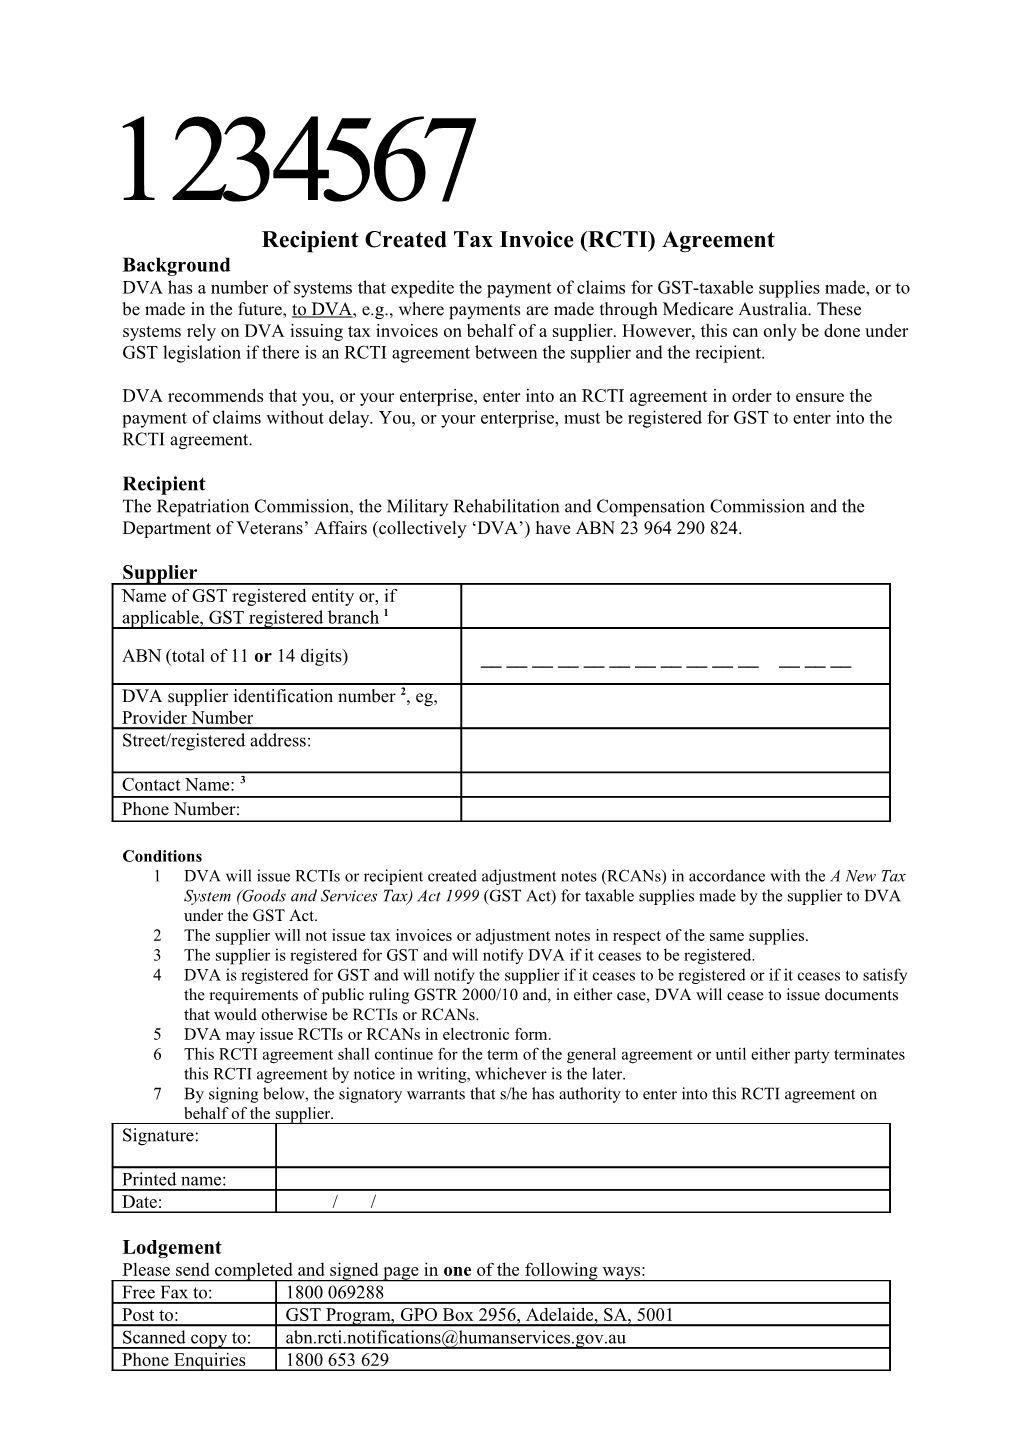 Recipient Created Tax Invoice (RCTI) Agreement